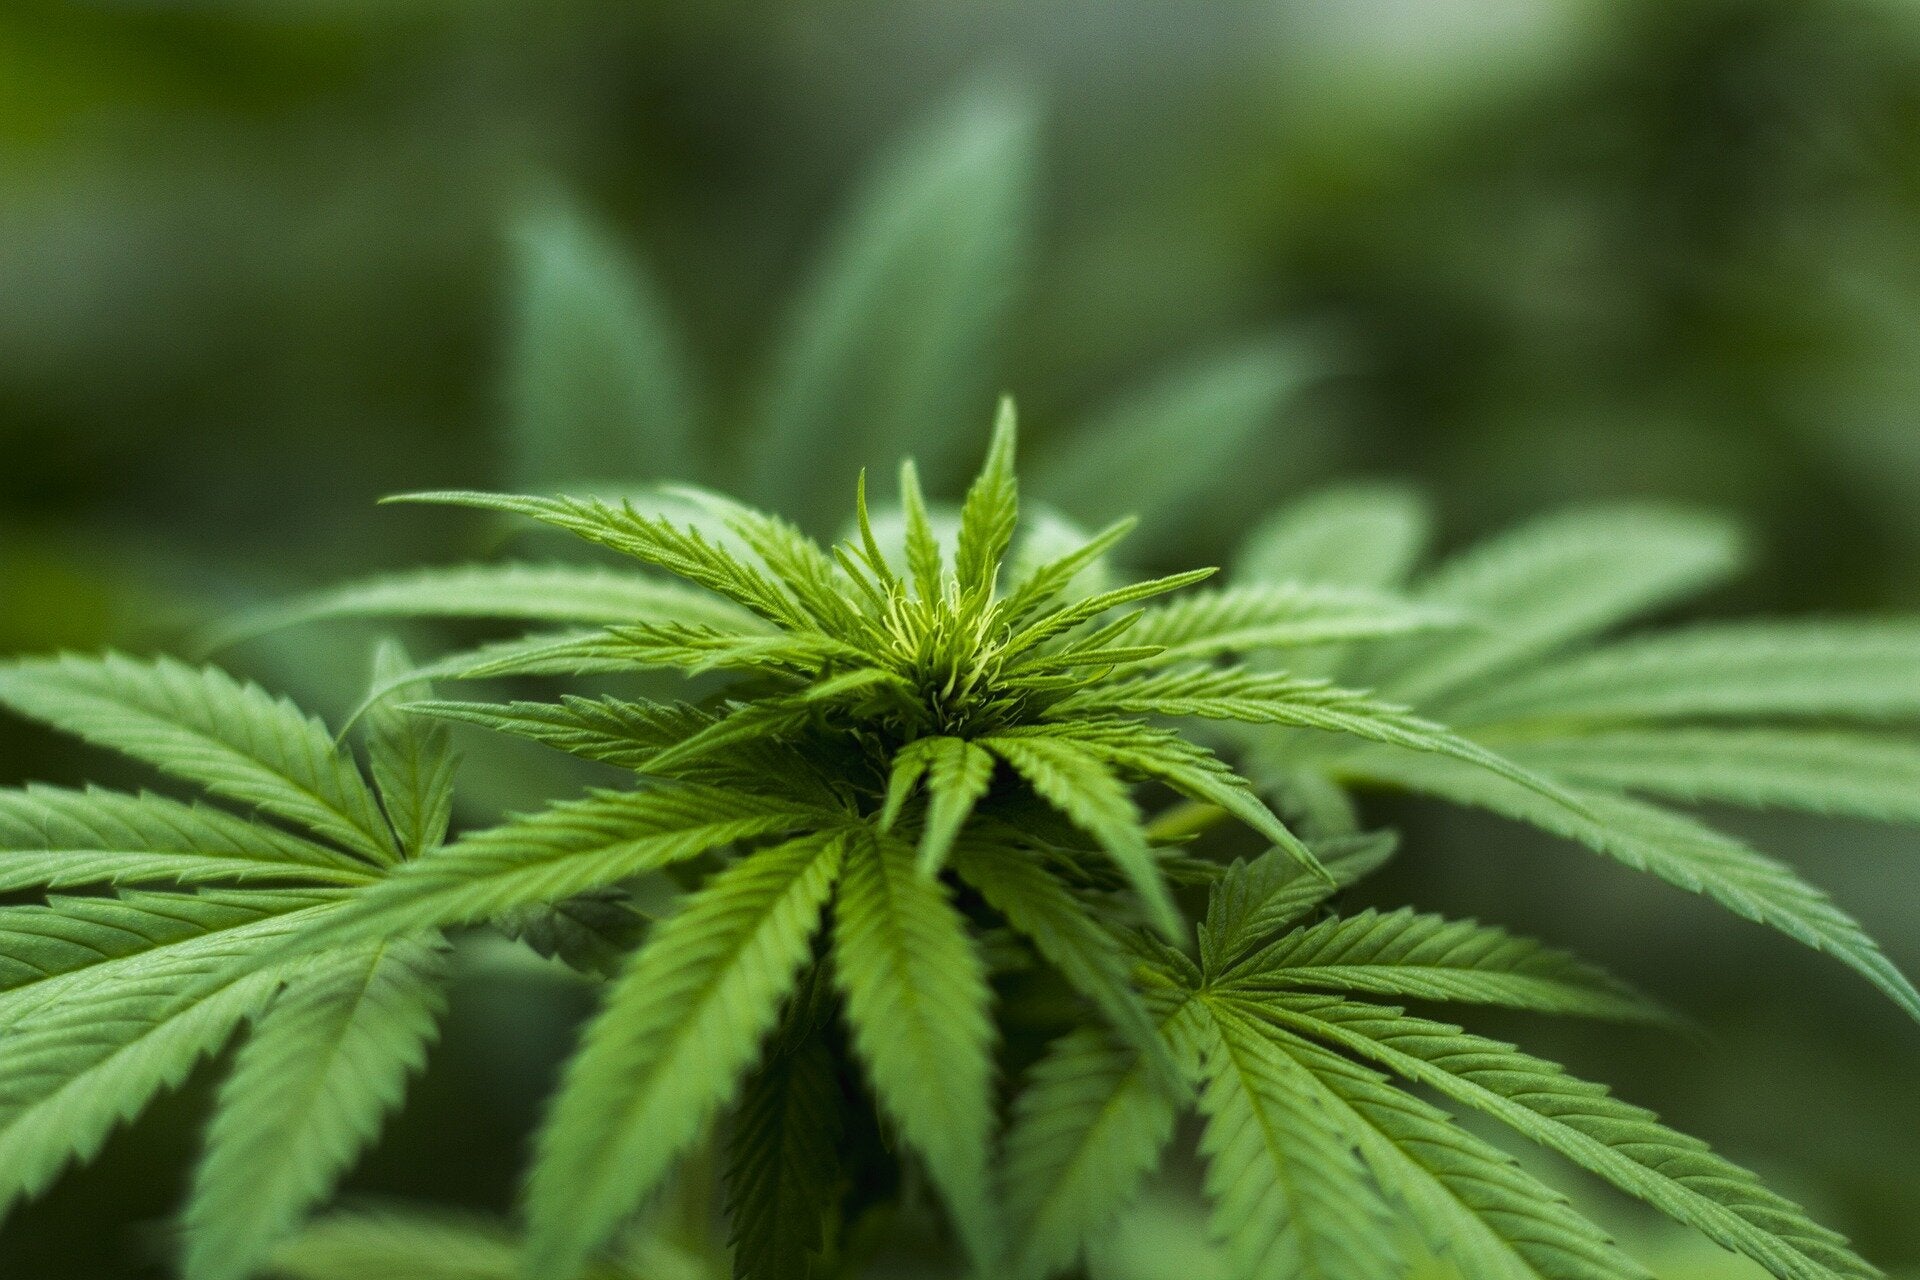 Legal marijuana may be slowing reductions in teen marijuana use, study says